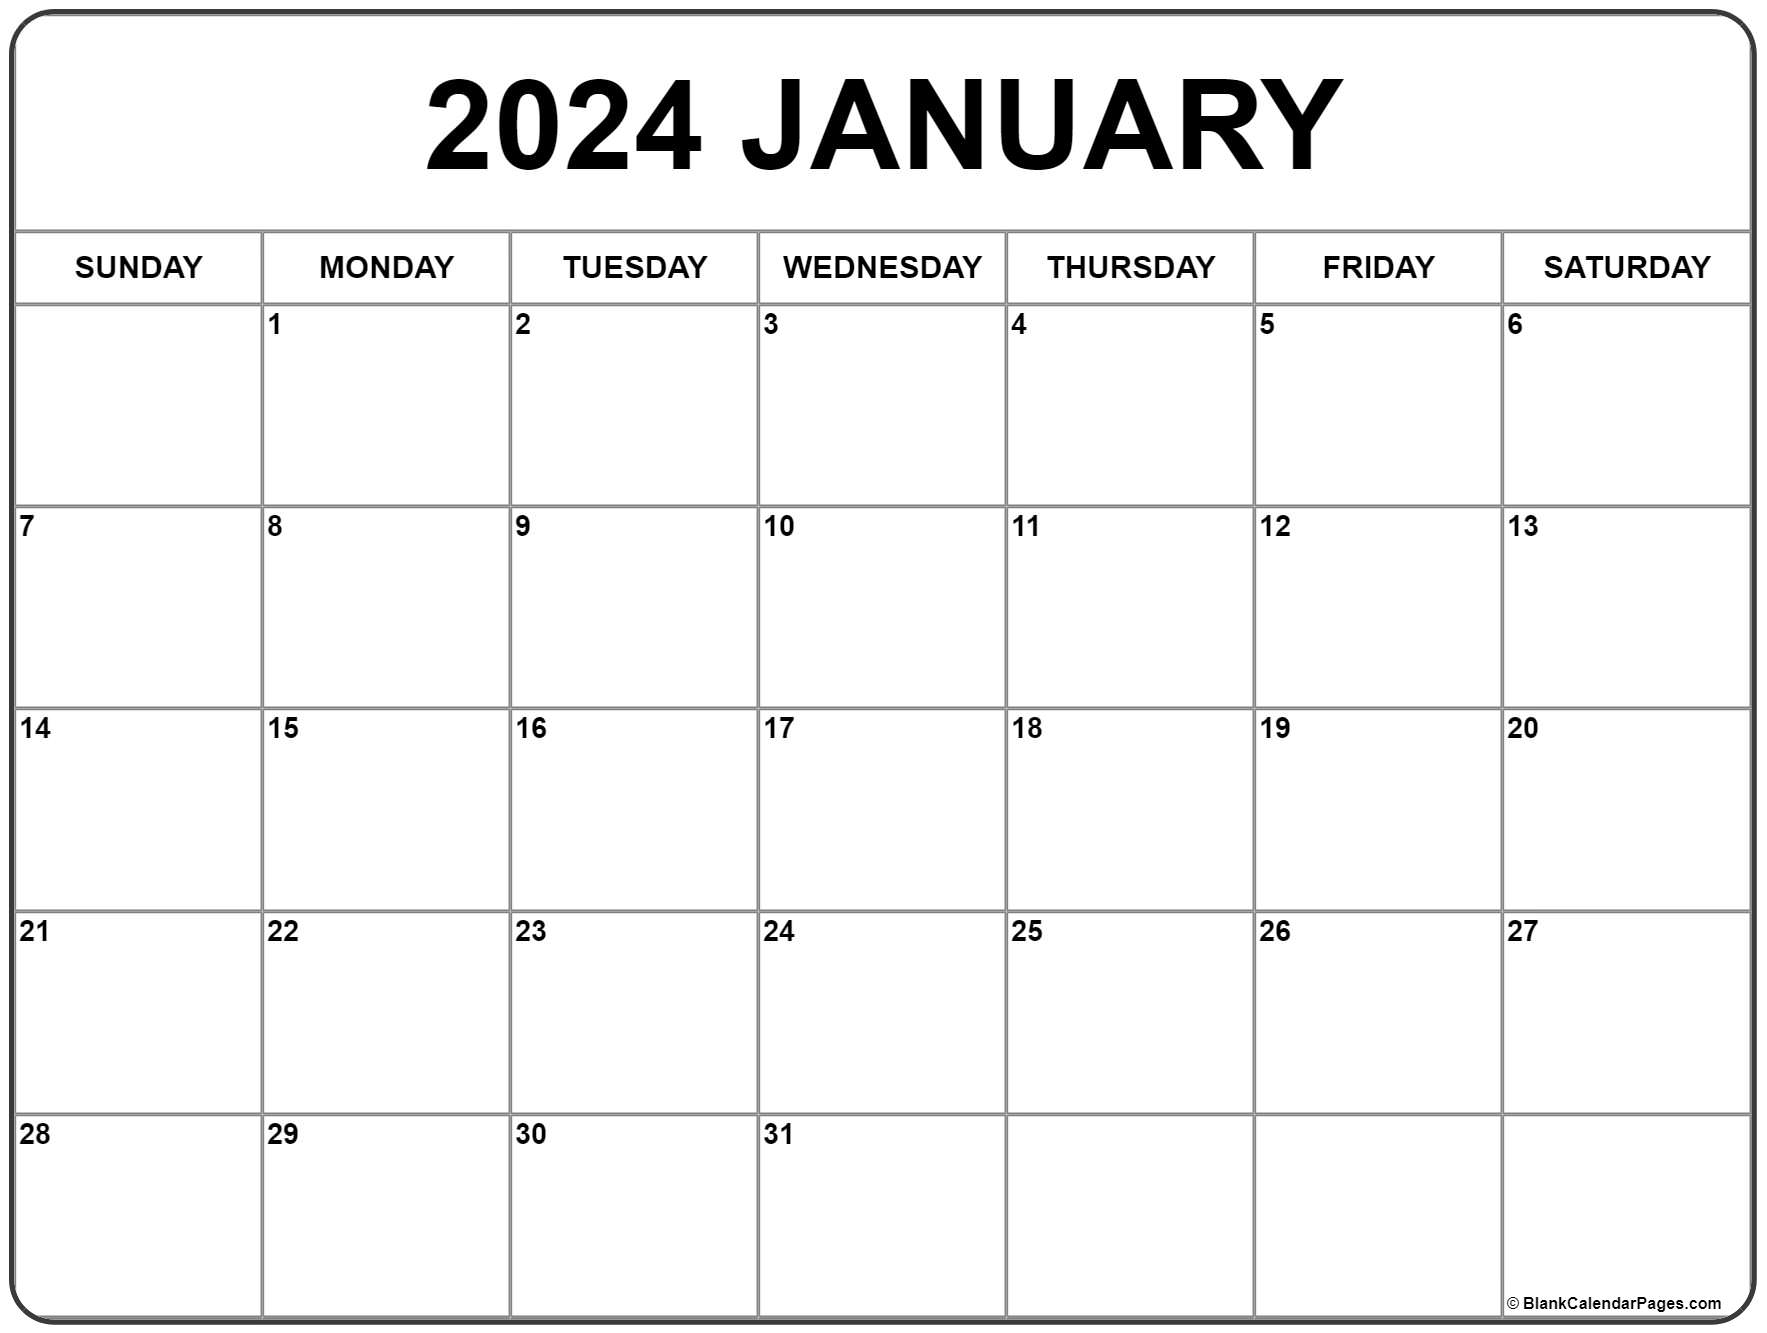 Print Free 2022 Monthly Calendar January 2022 Calendar | Free Printable Calendar Templates